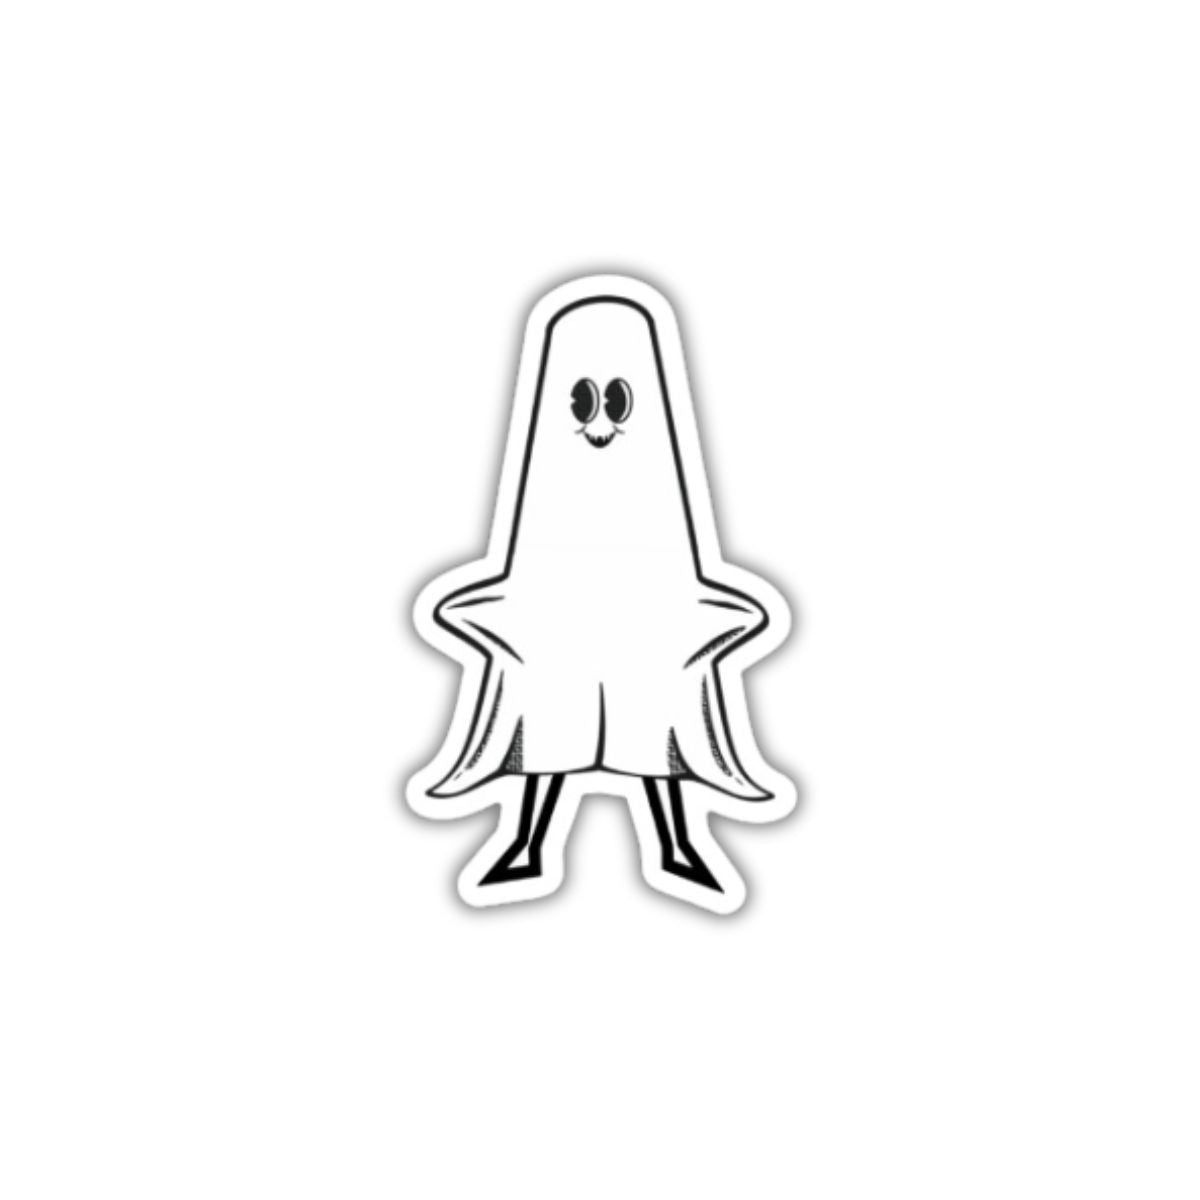 Ghoulish Ghosty Sticker - LOUD